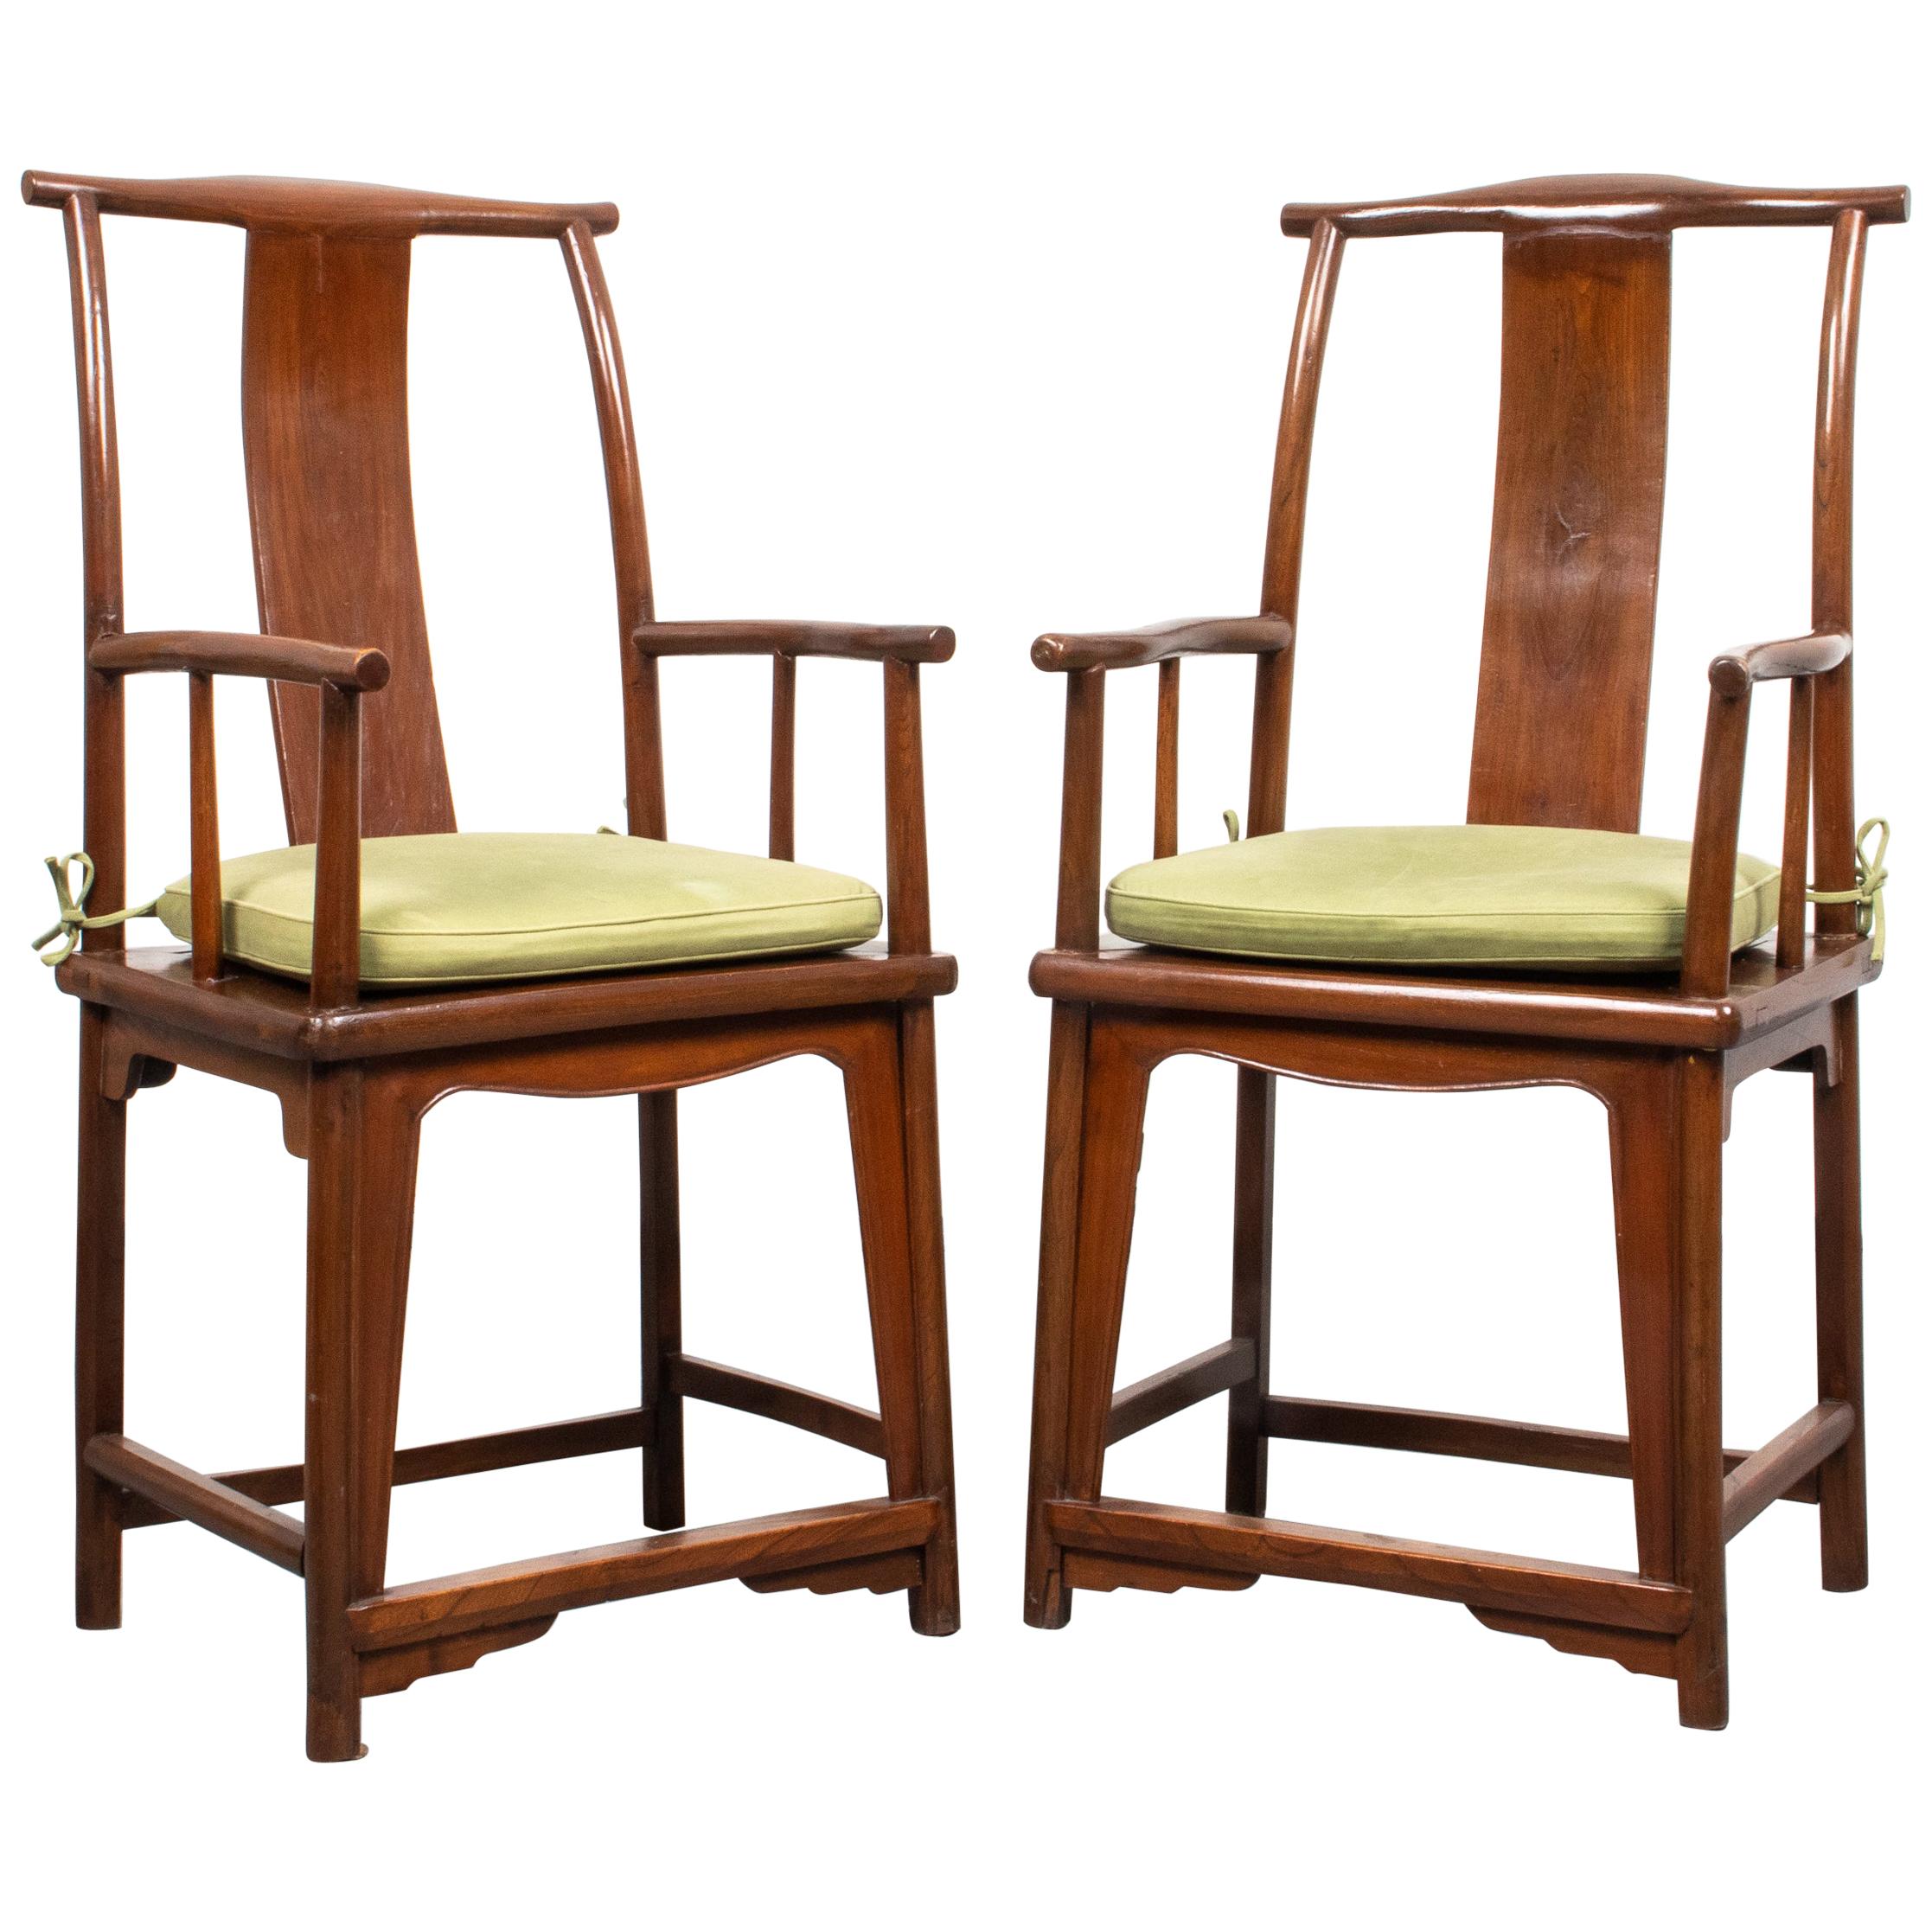 Chinese Hardwood Yoke Back Scholar's Chairs